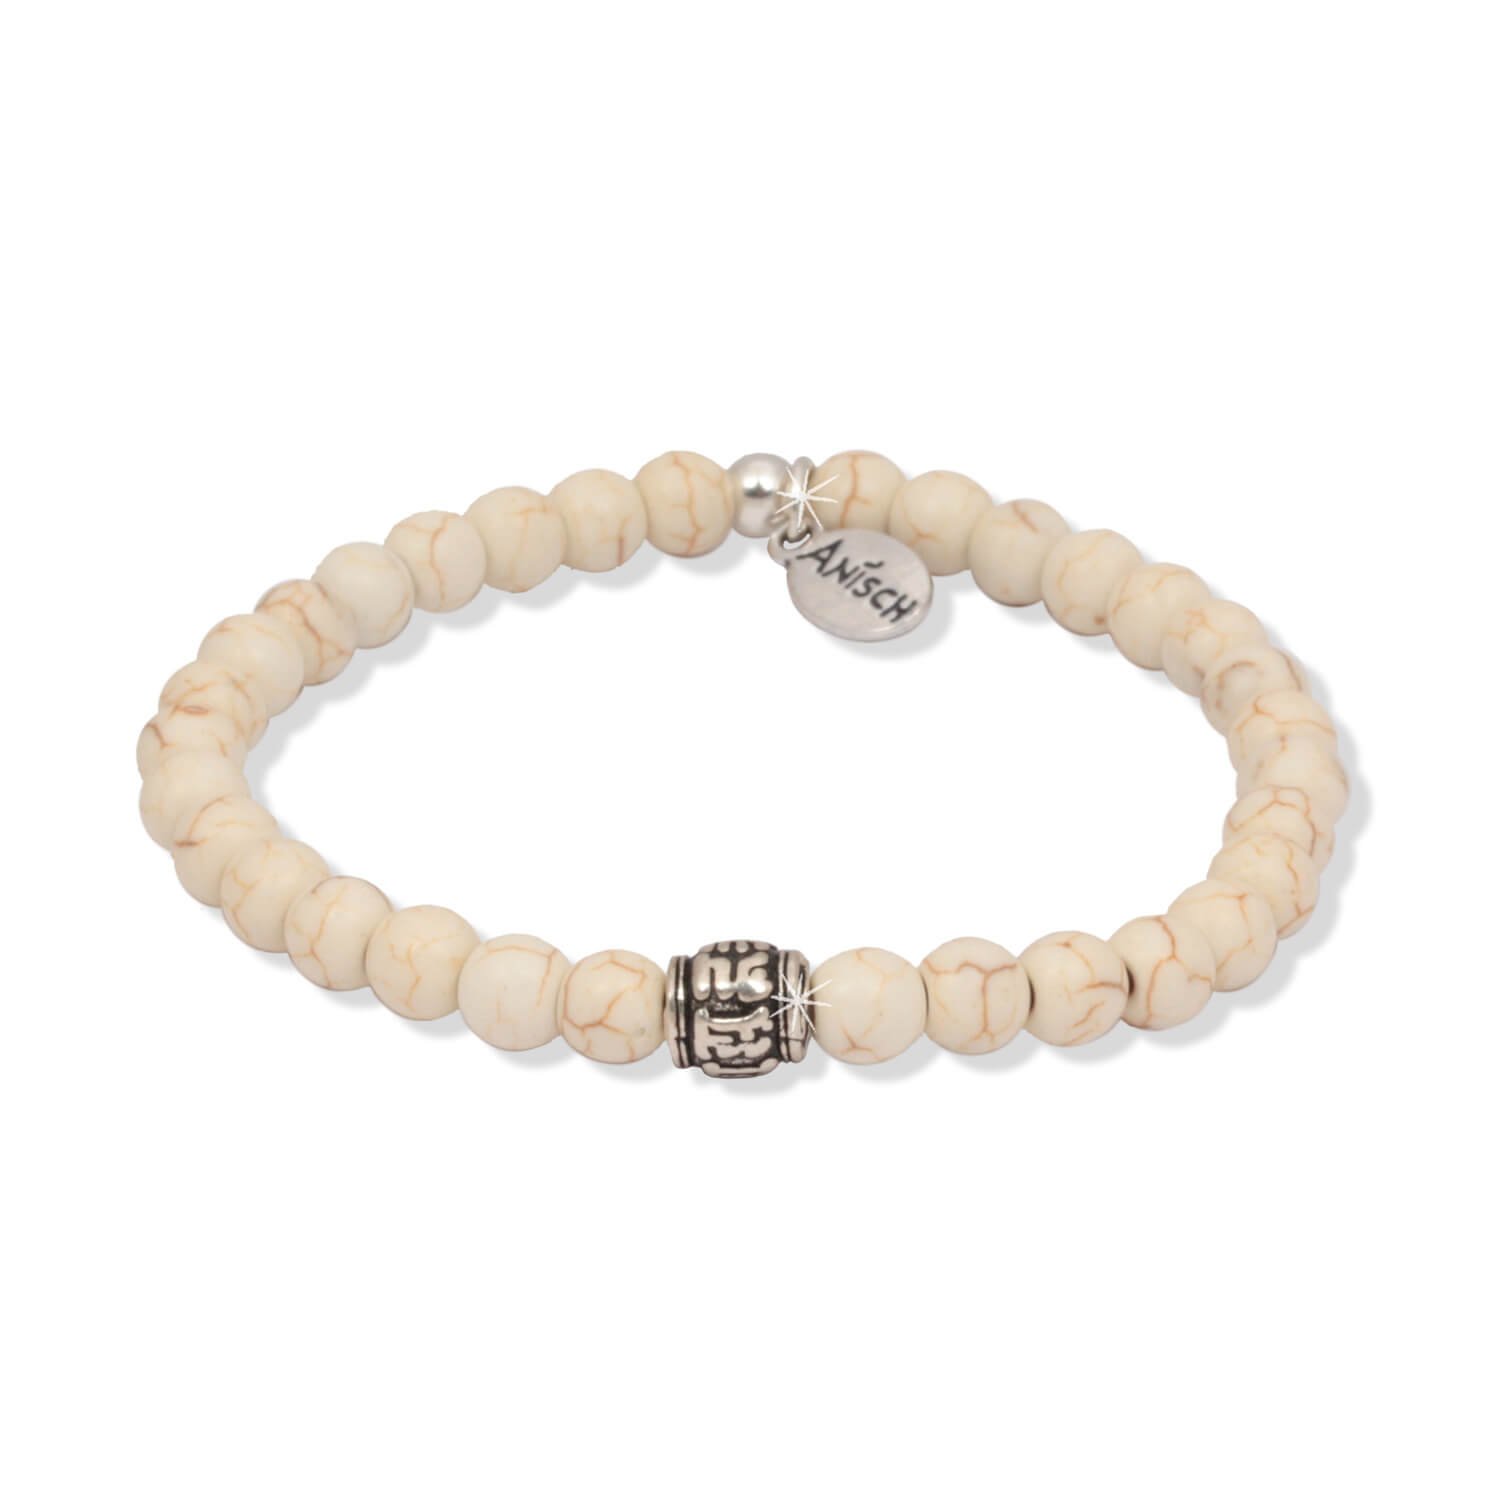 Little Magnesit - Mantra Beads gemstone bracelet for men with sterling silver, 6 mm